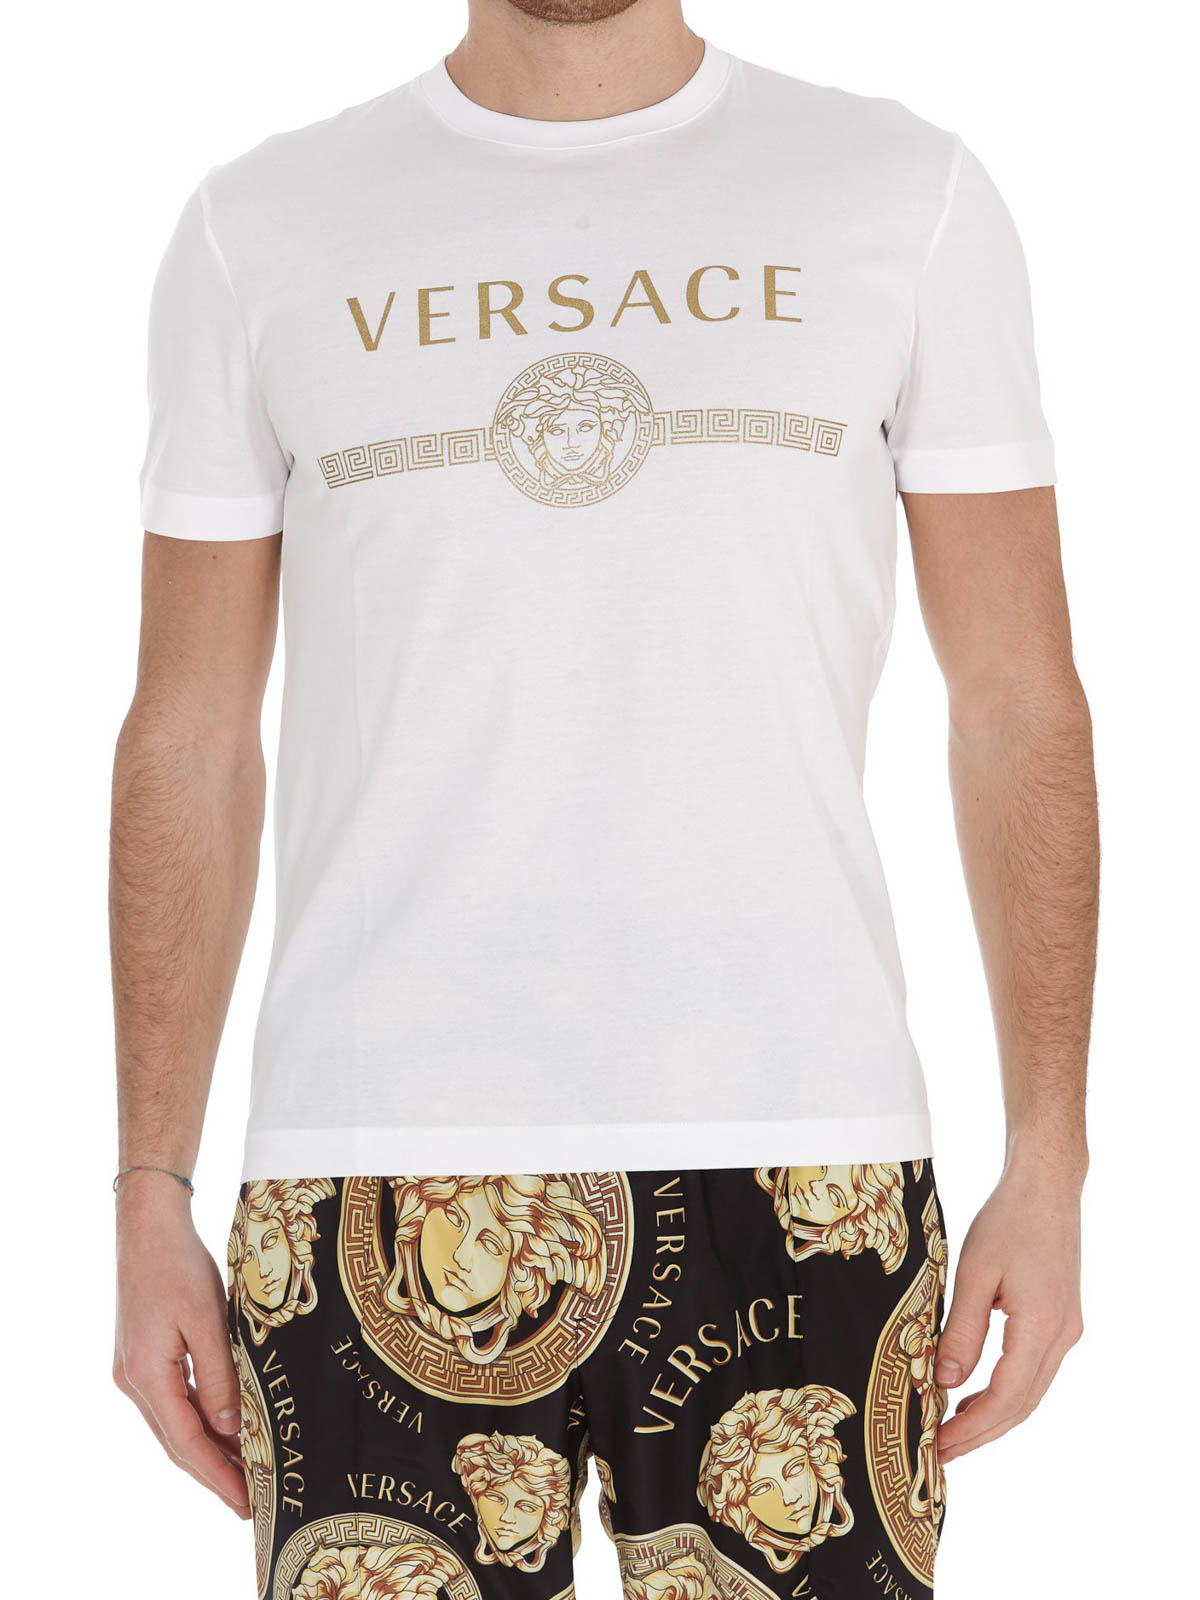 Versace Shirt Logo | canoeracing.org.uk